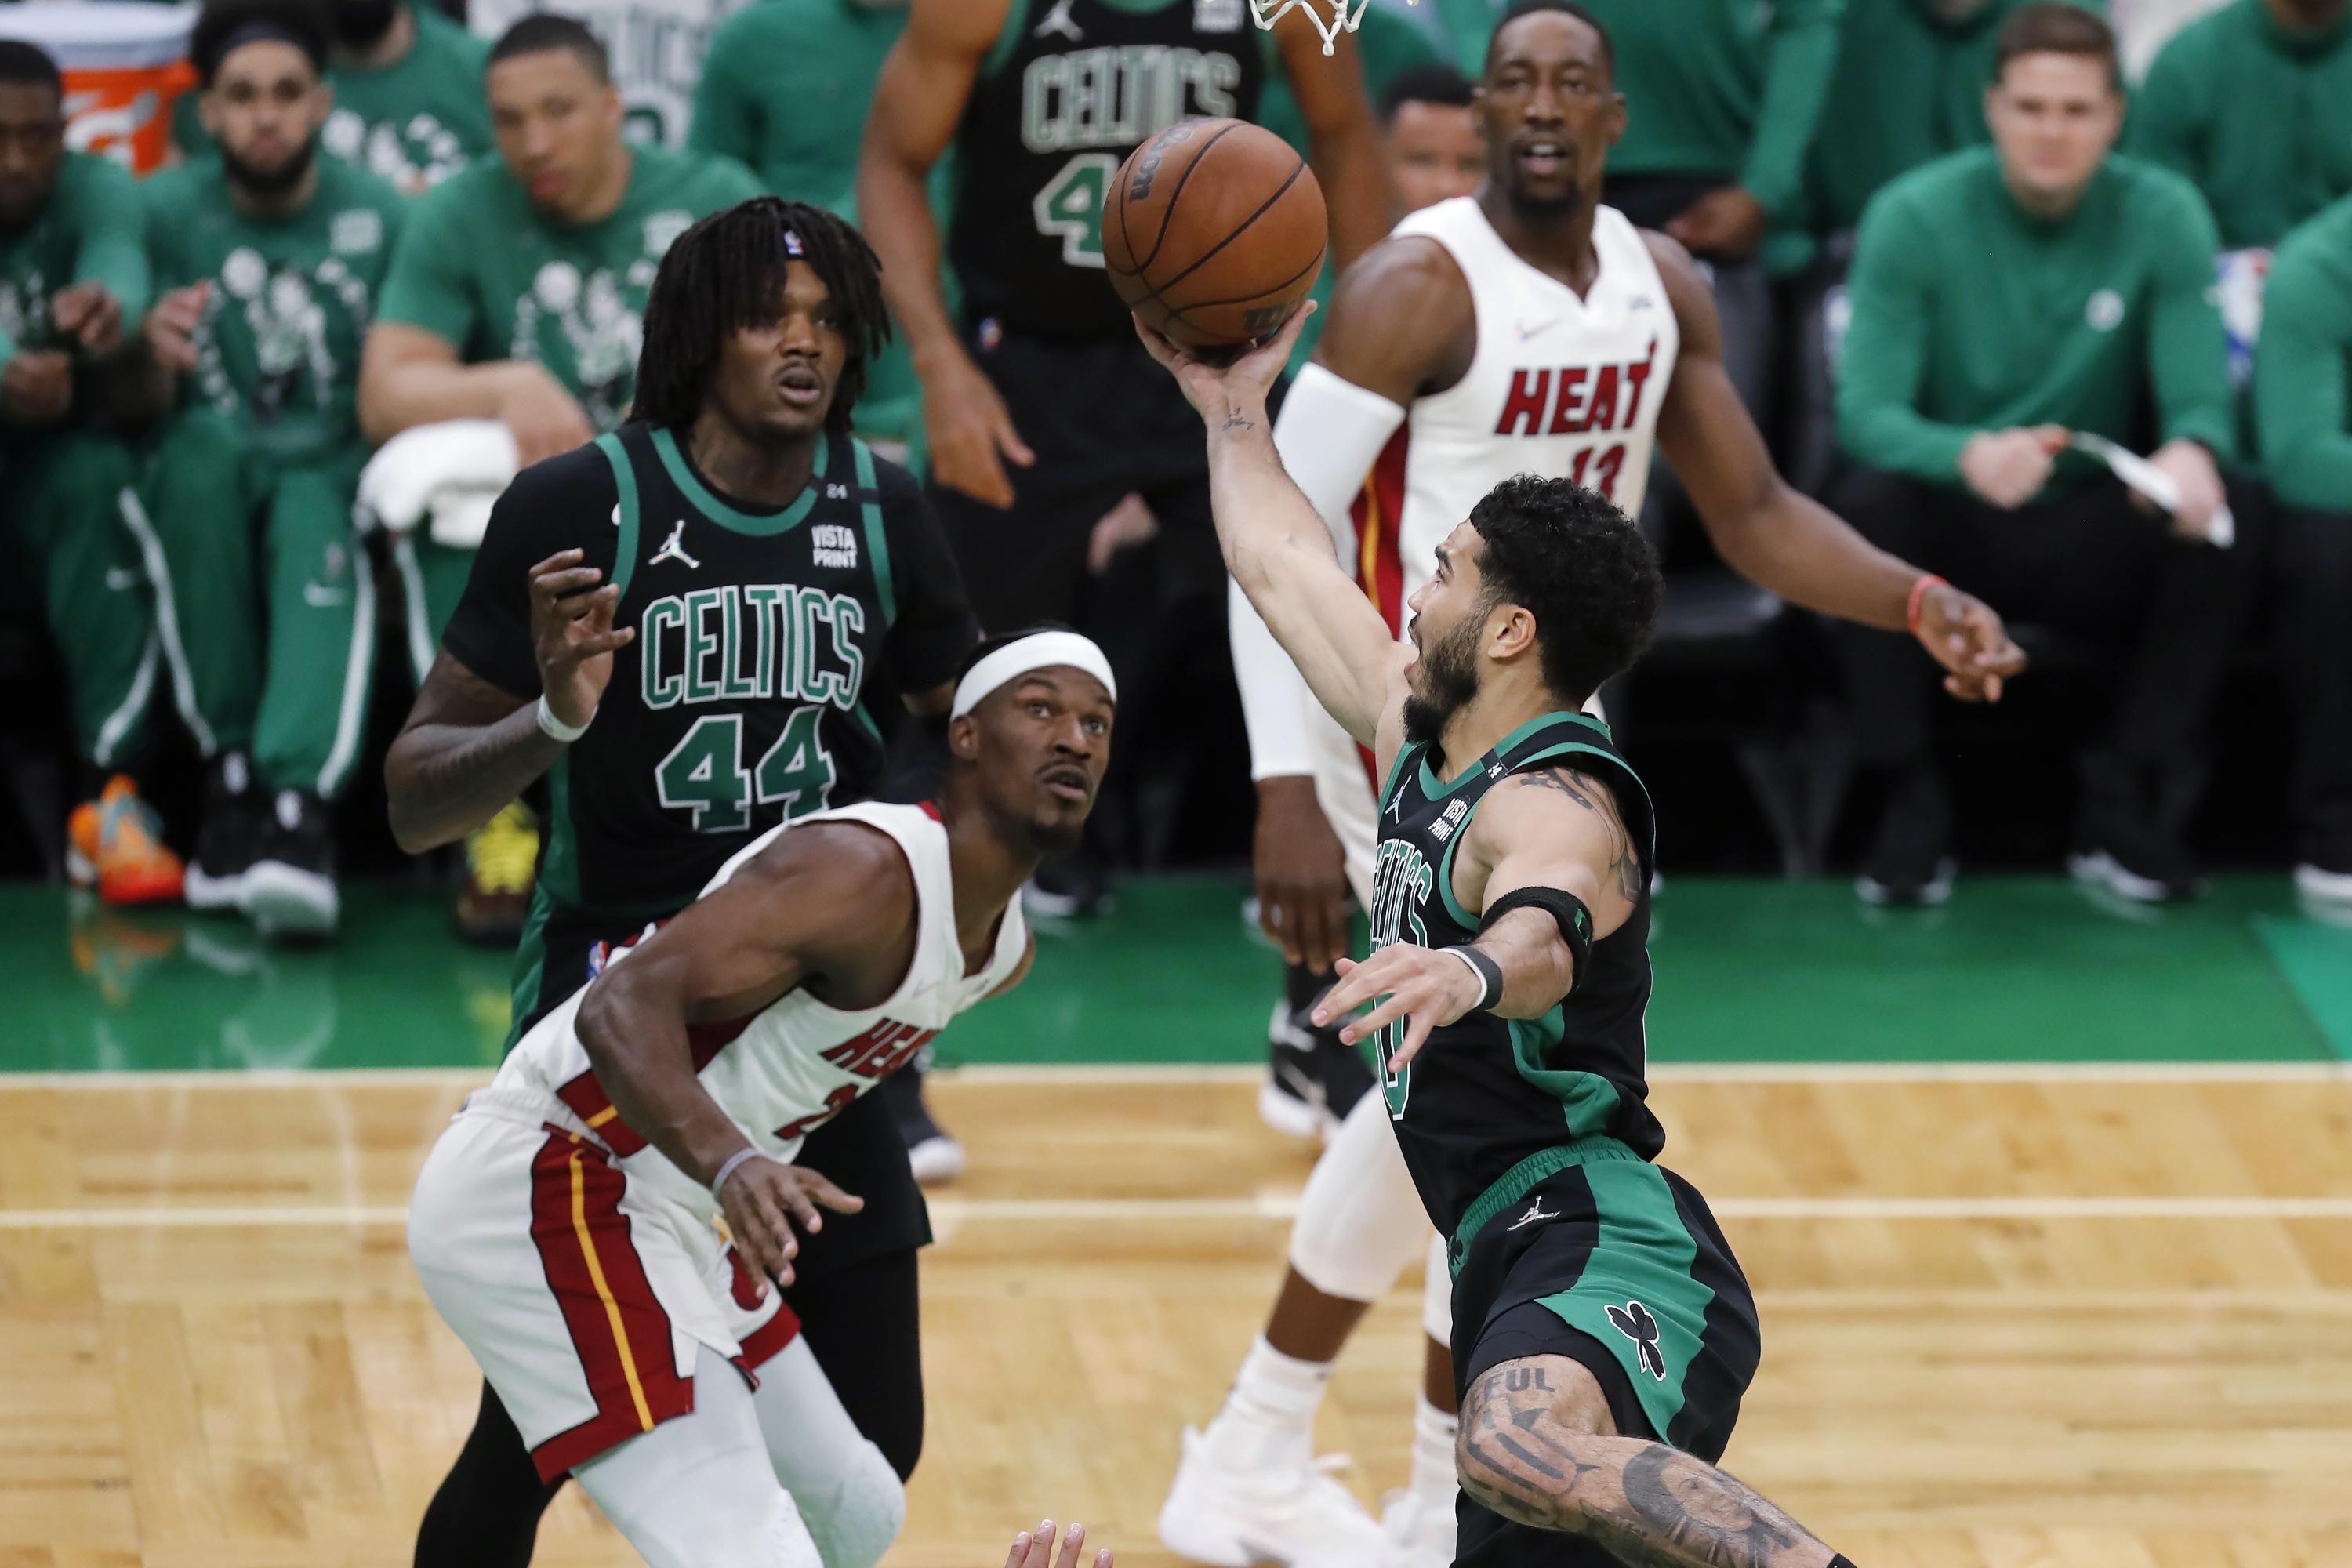 Heat y Celtics se enfrentan en duelo decisivo AP News